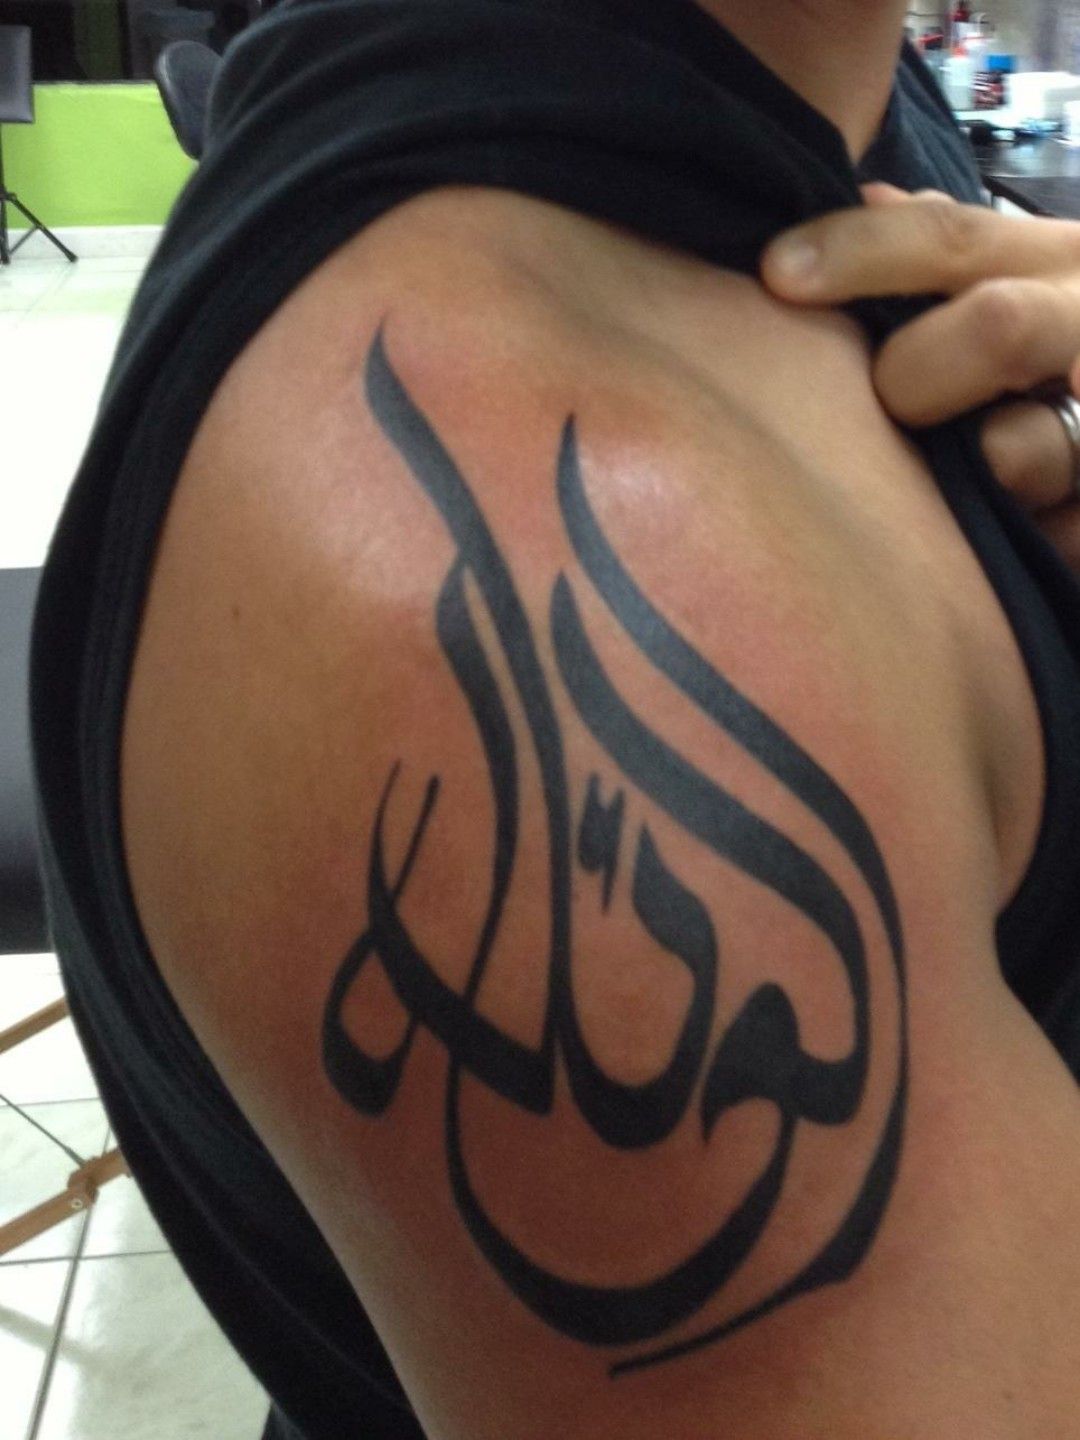 Why Tattoo is Haram in Islam  A Brief Explanation  AZislamcom  Prohibition